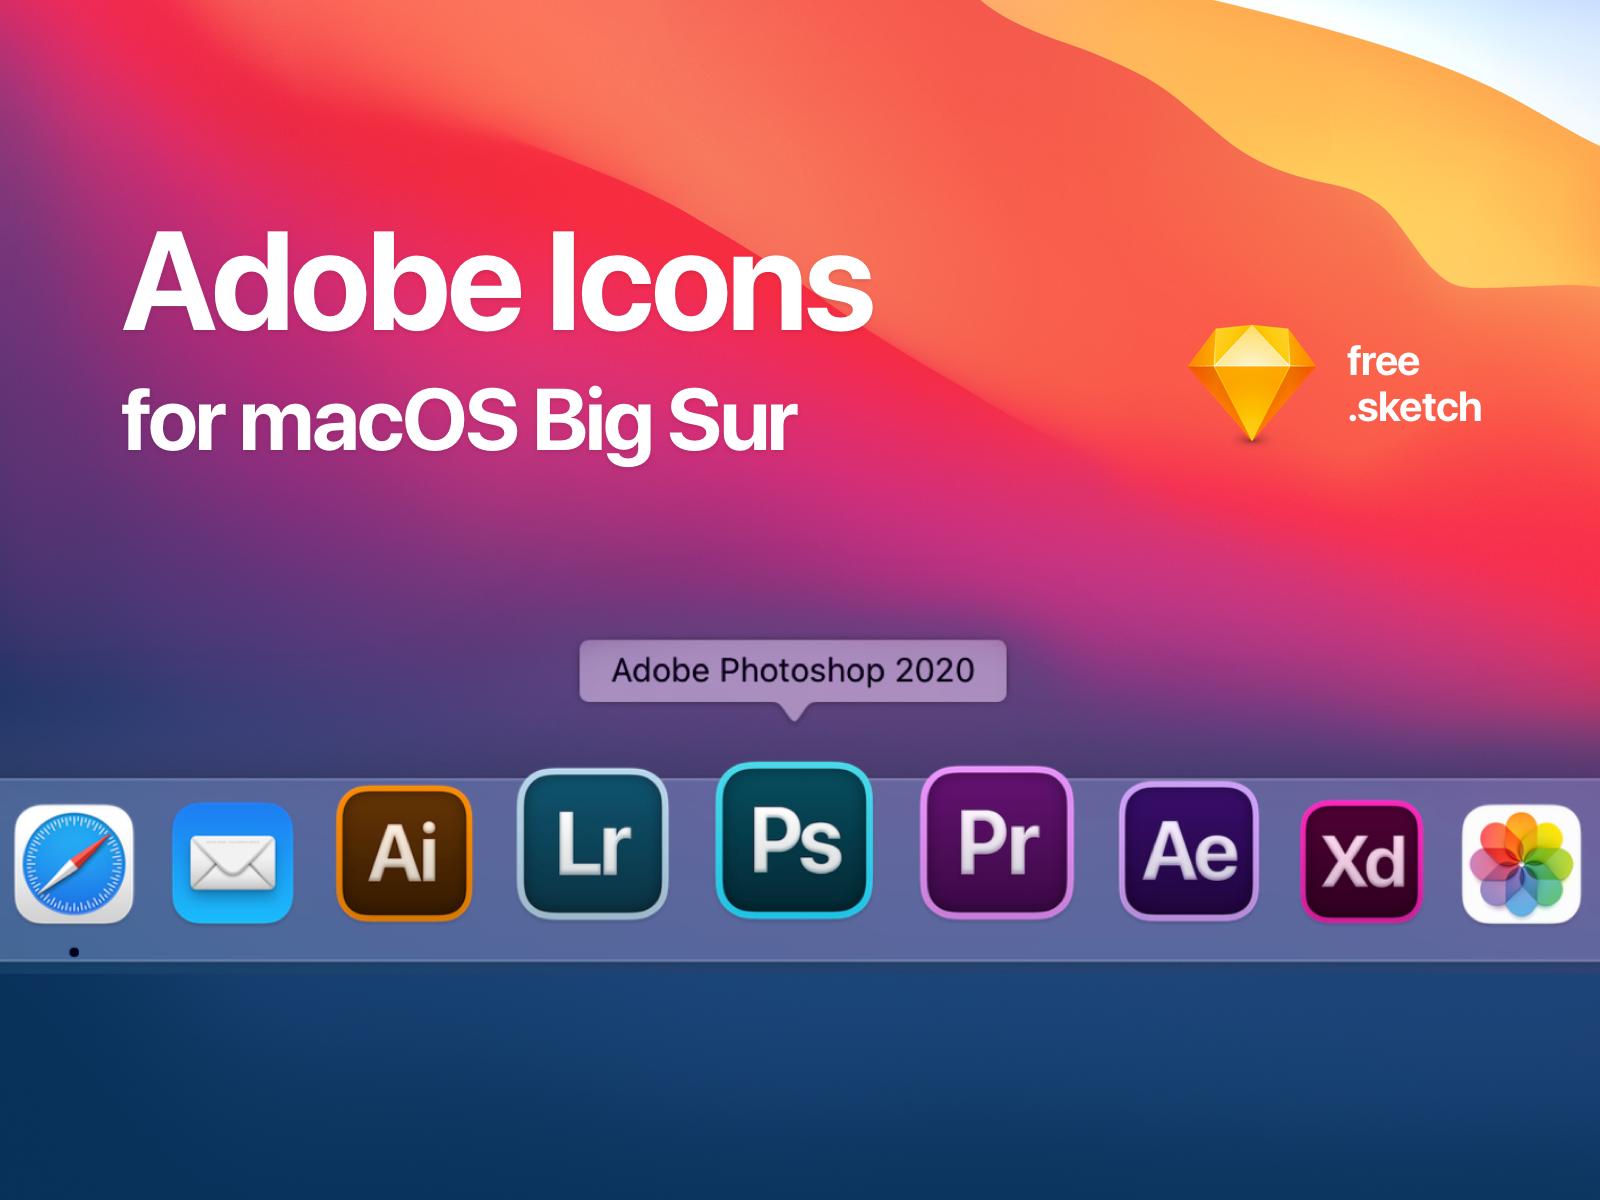 Adobe Icons for macOS Big Sur (Free Sketch File)